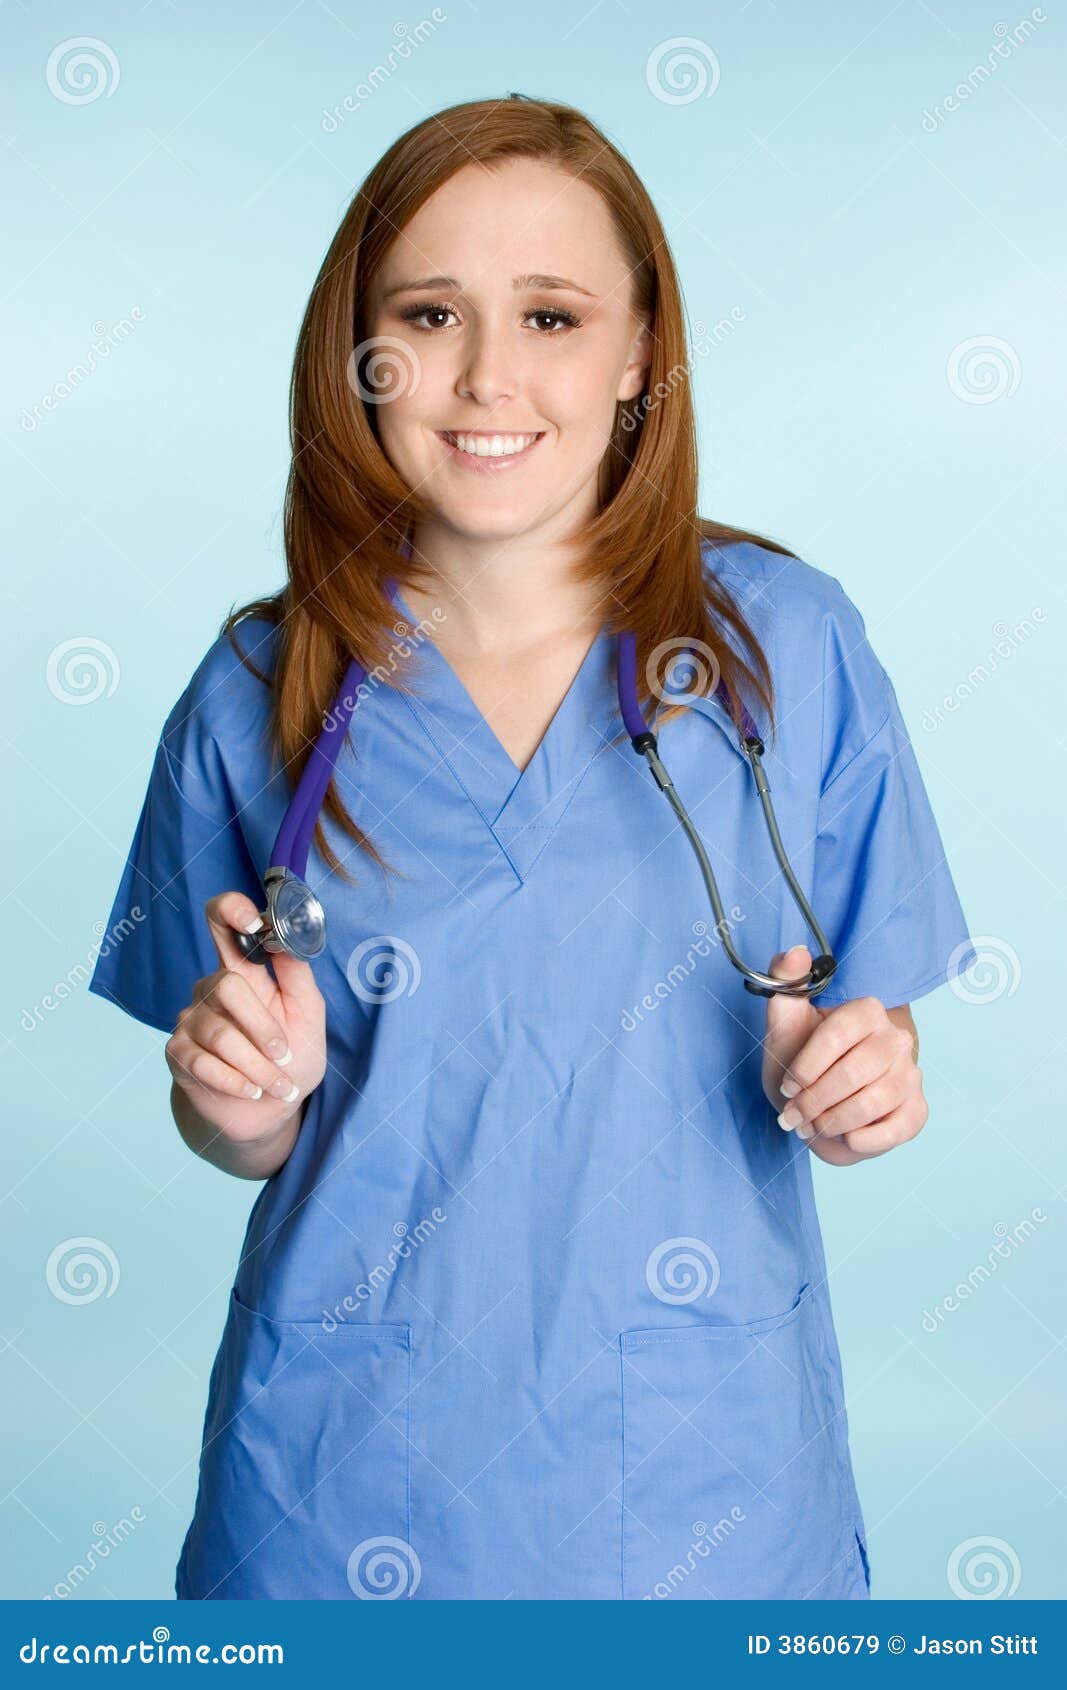 Nurse Wearing Scrubs stock image Image of health people 